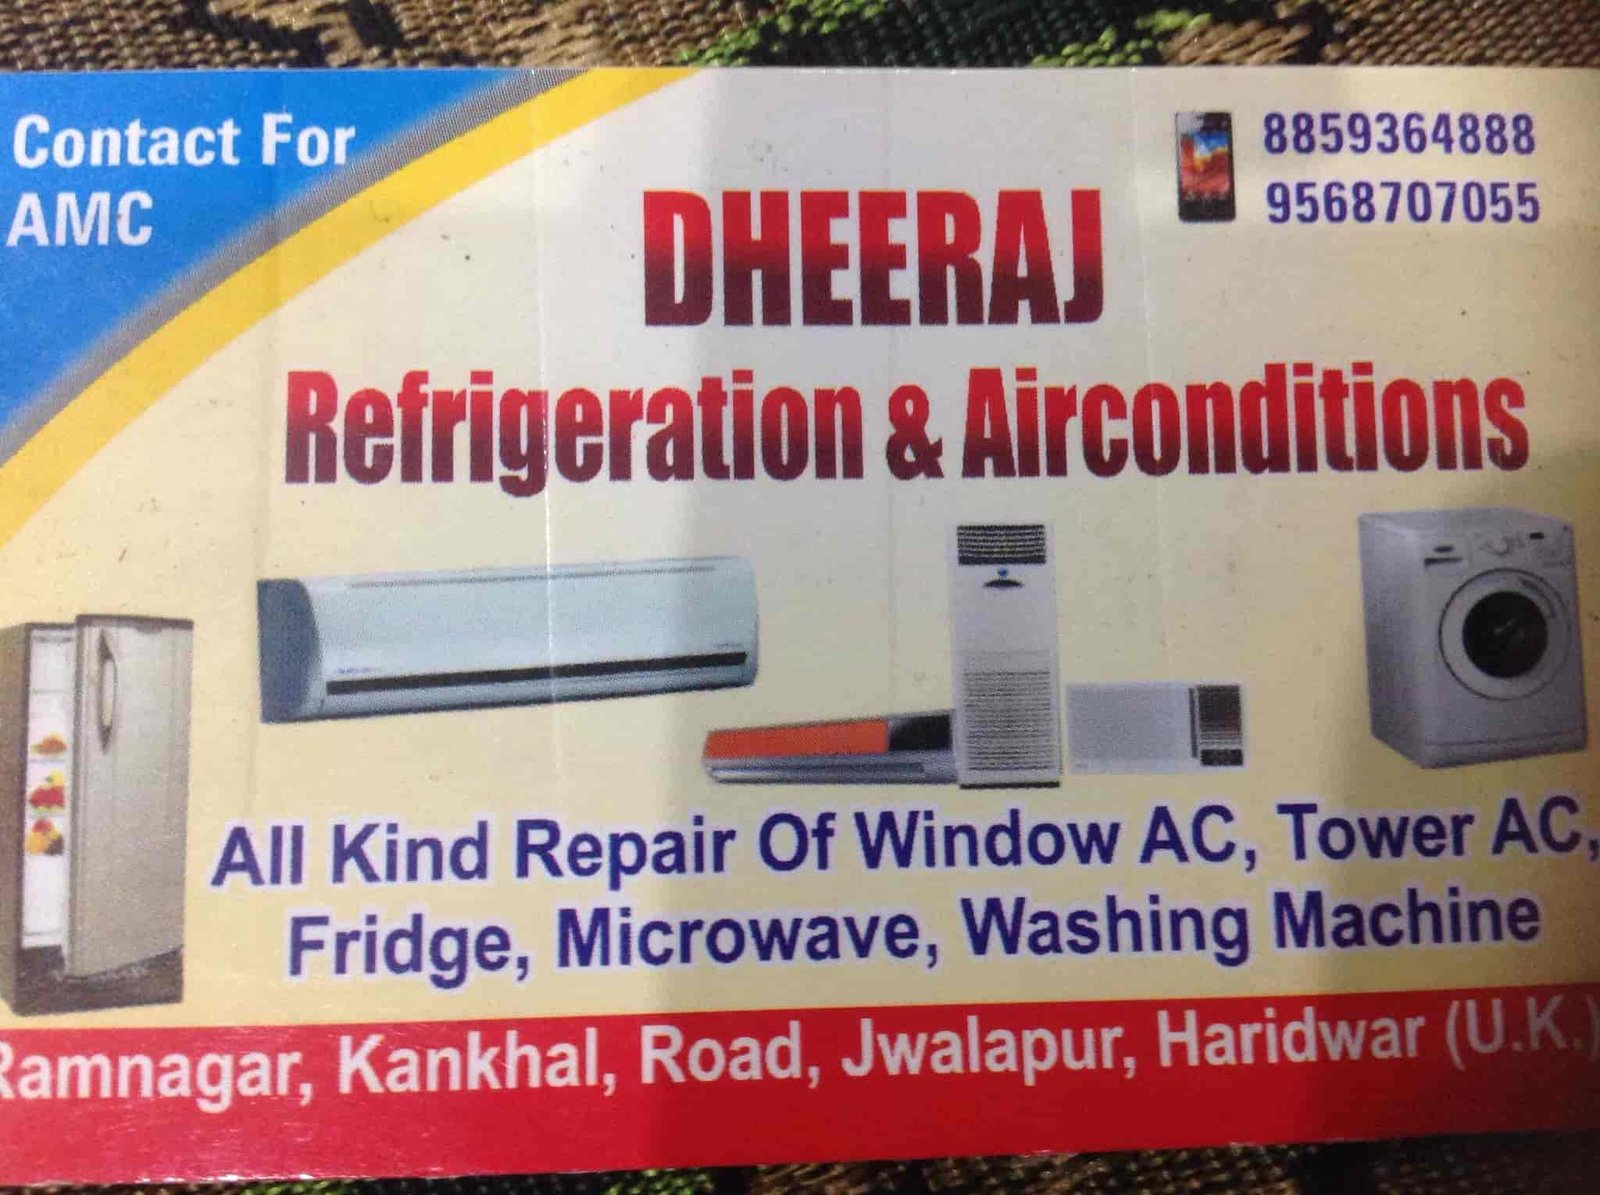 Dheeraj Refrigeration & Airconditions